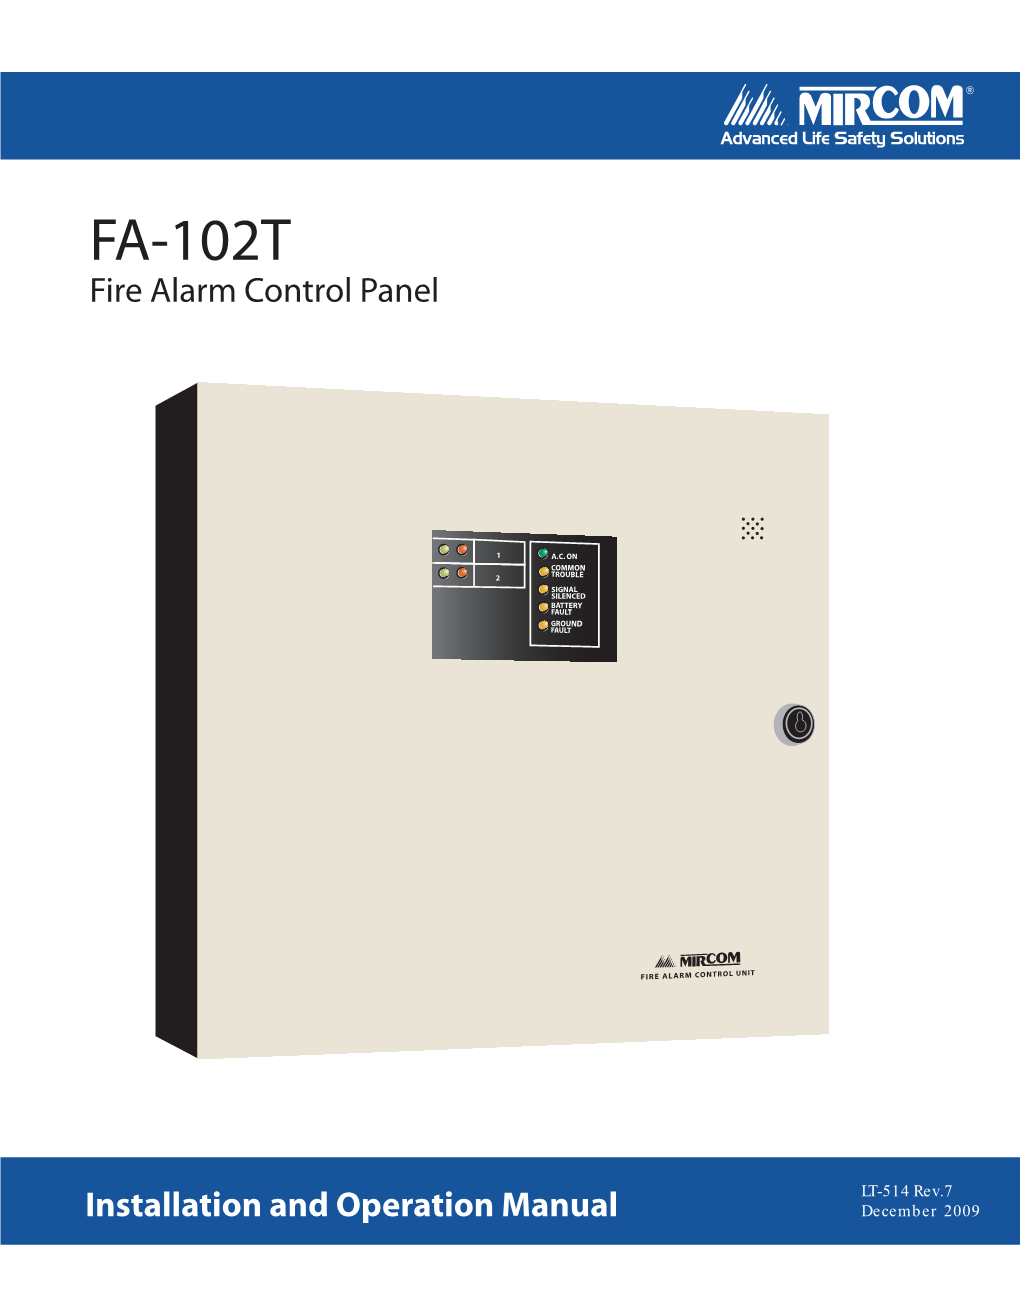 FA-102T Fire Alarm Control Panel